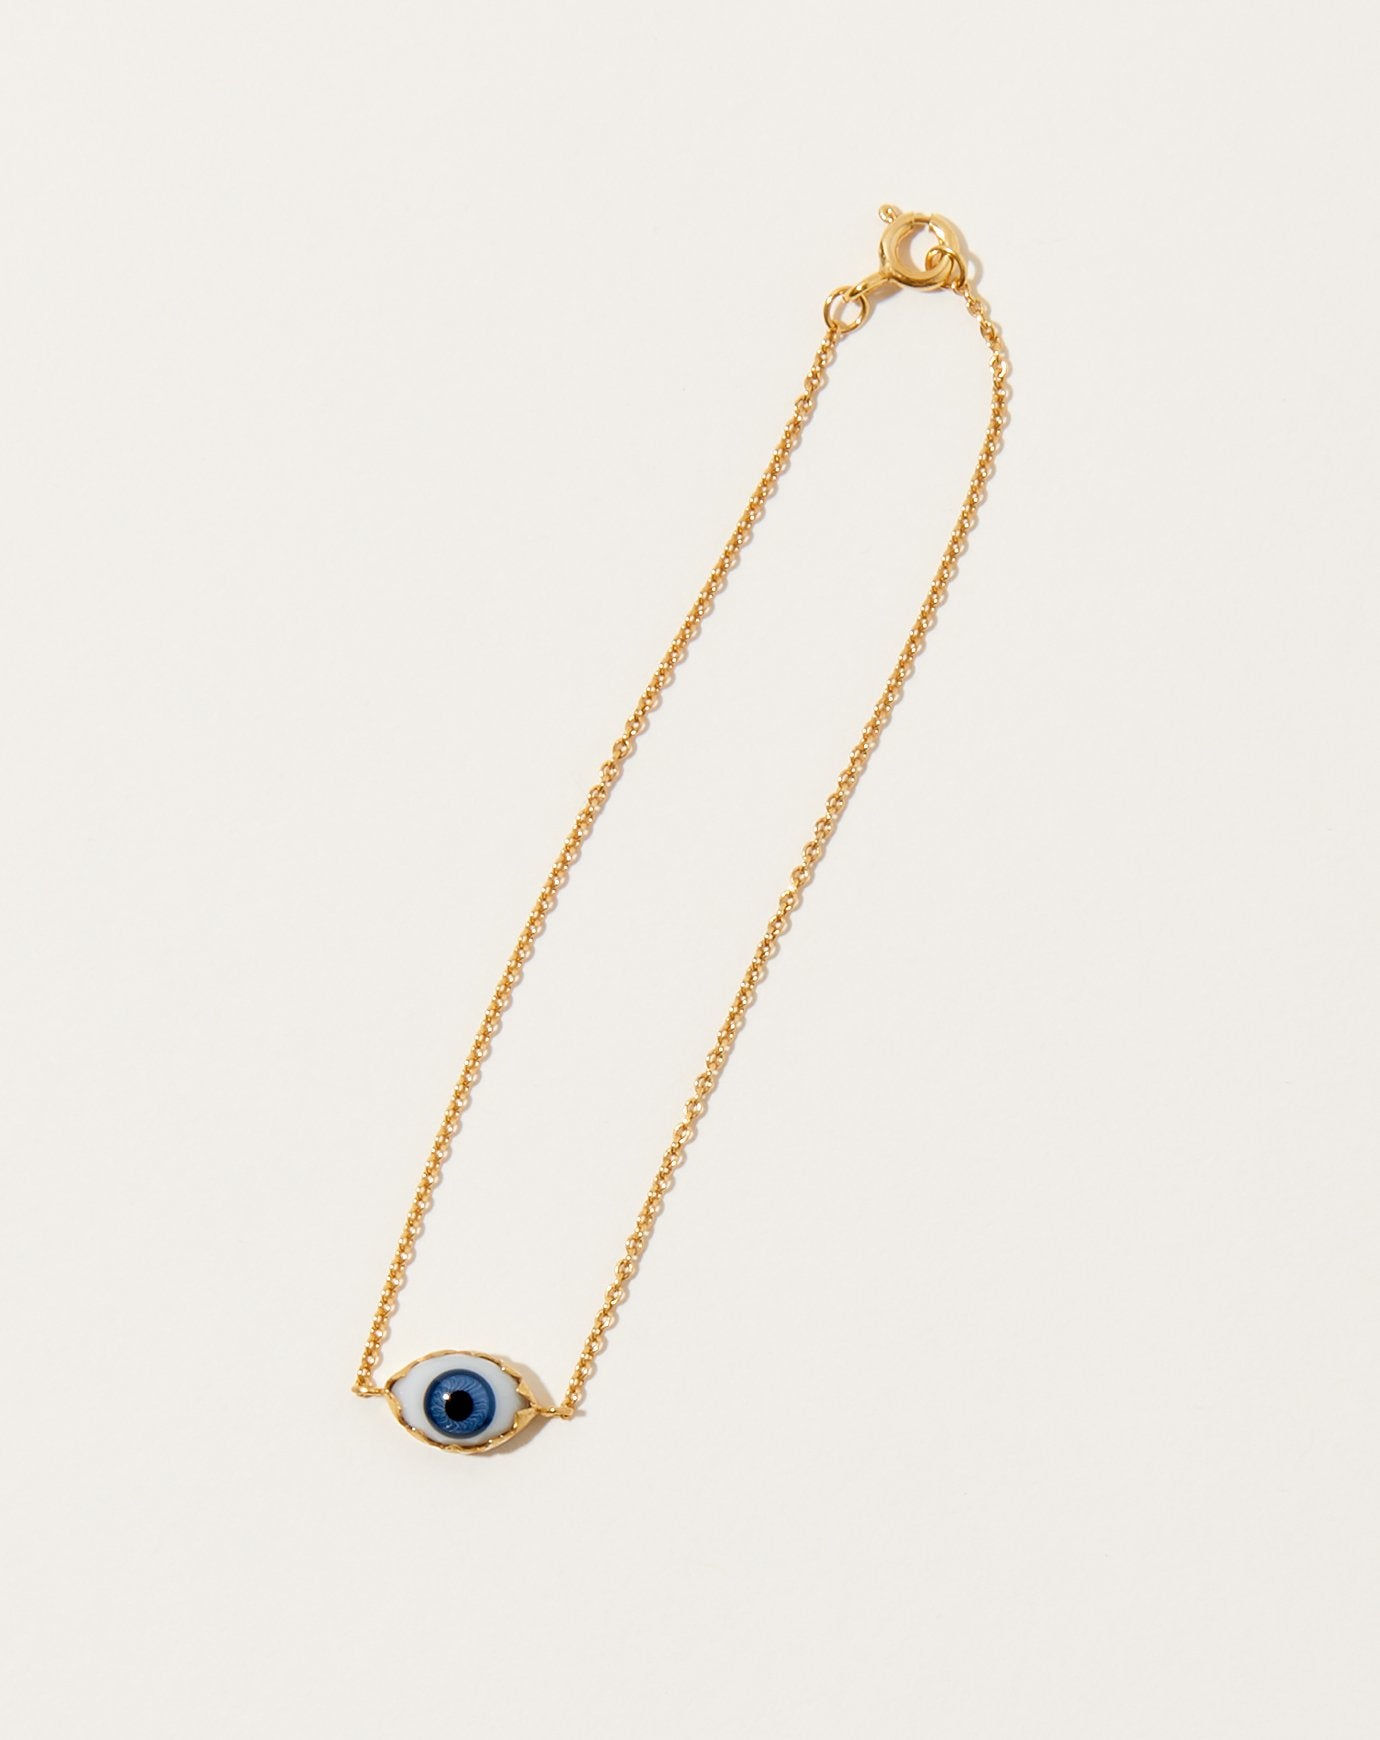 Grainne Morton Single Eye Bracelet